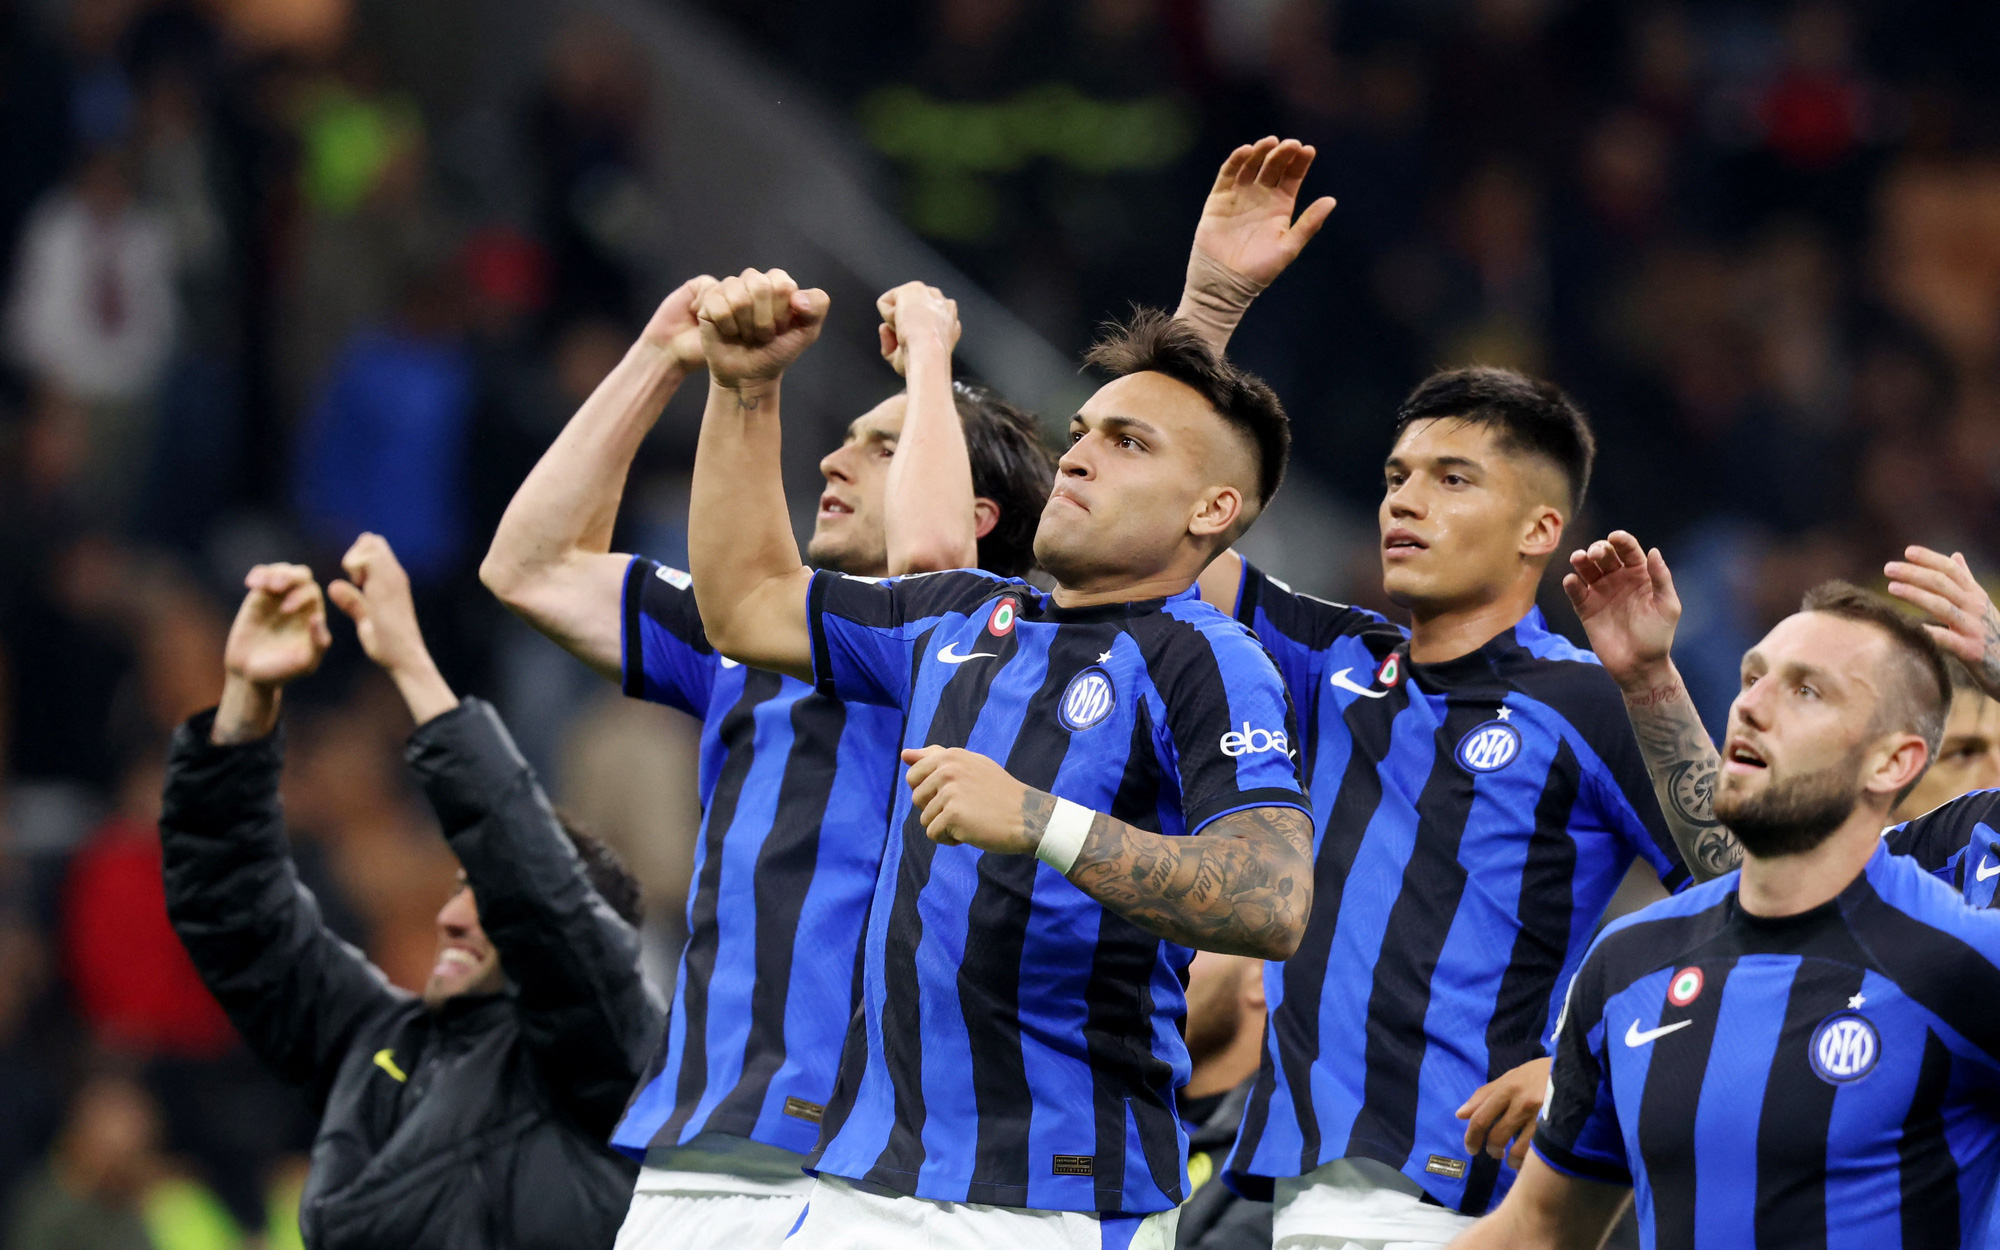 Thắng trận derby, Inter Milan tiến gần chung kết Champions League